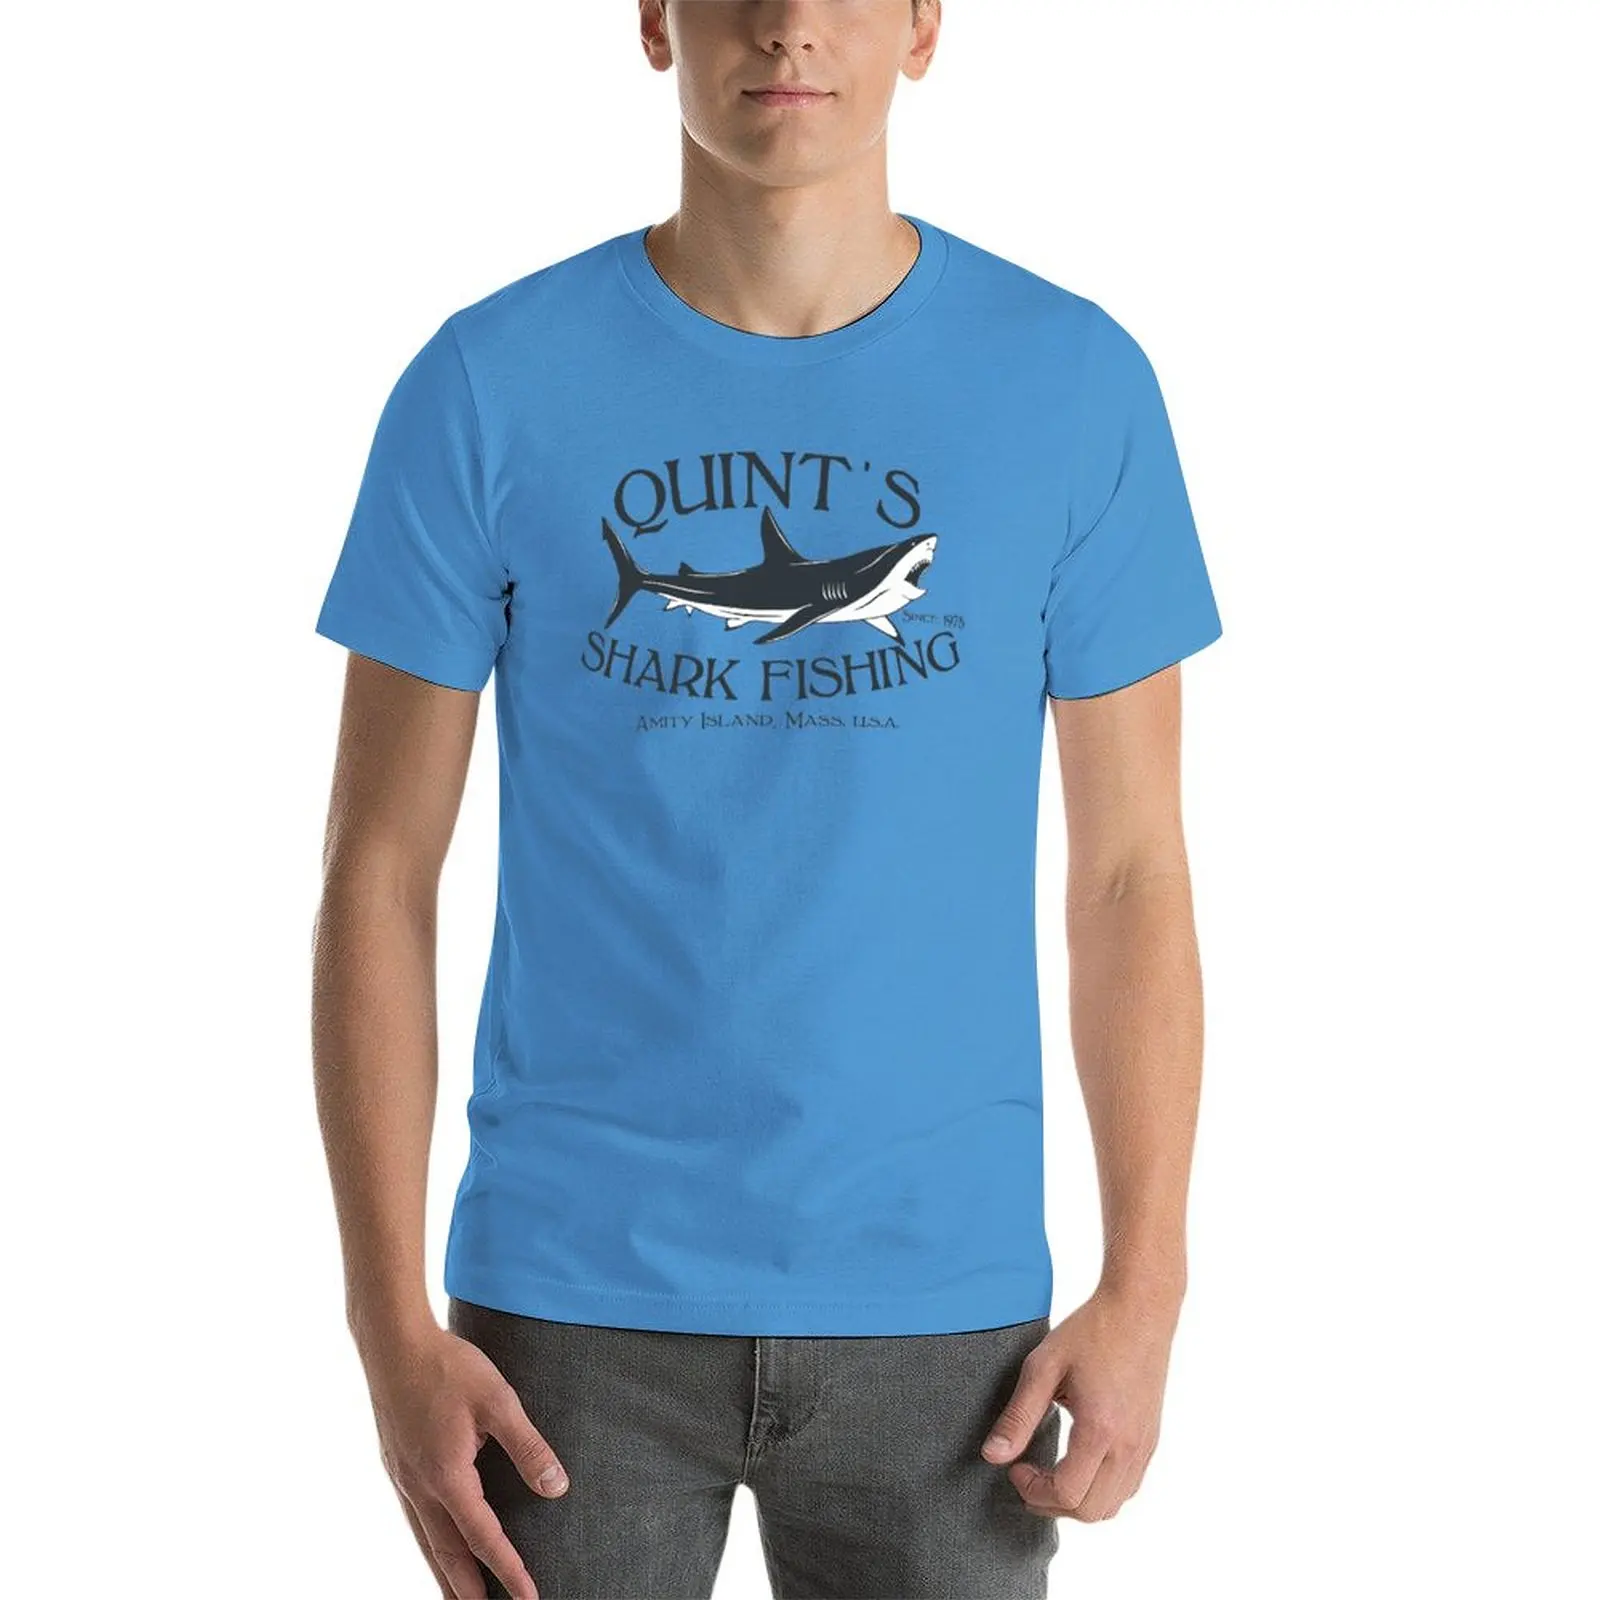 New Quint's Shark Fishing T-Shirt boys white t shirts funny t